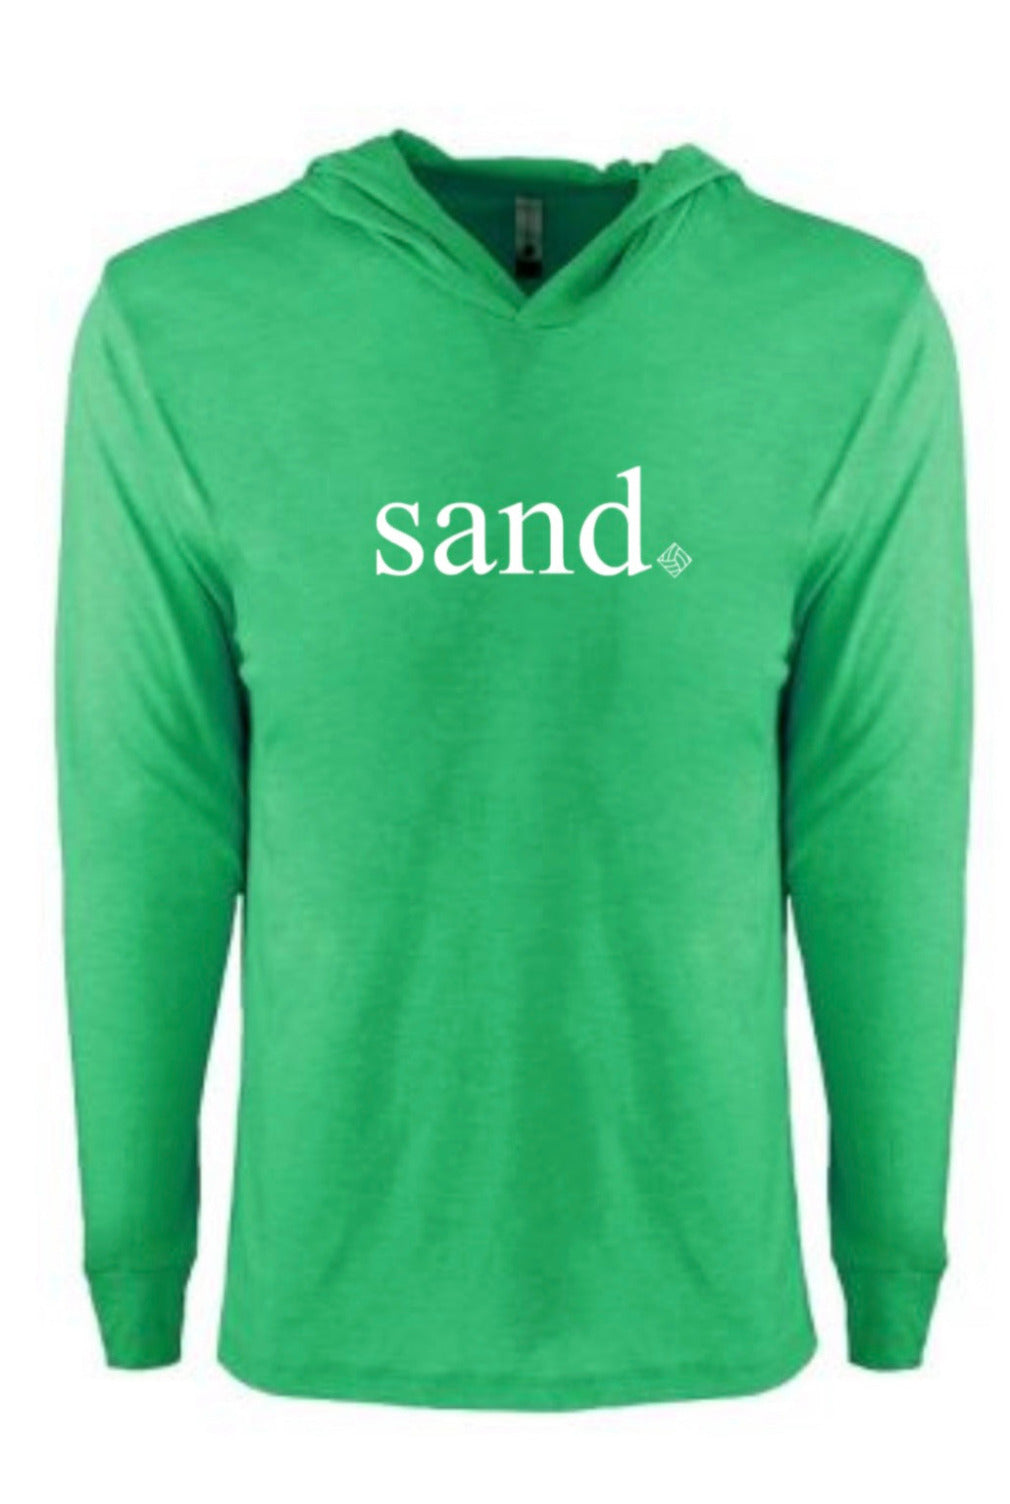 Sand T-Shirt Hoodie Tri Blend Unisex